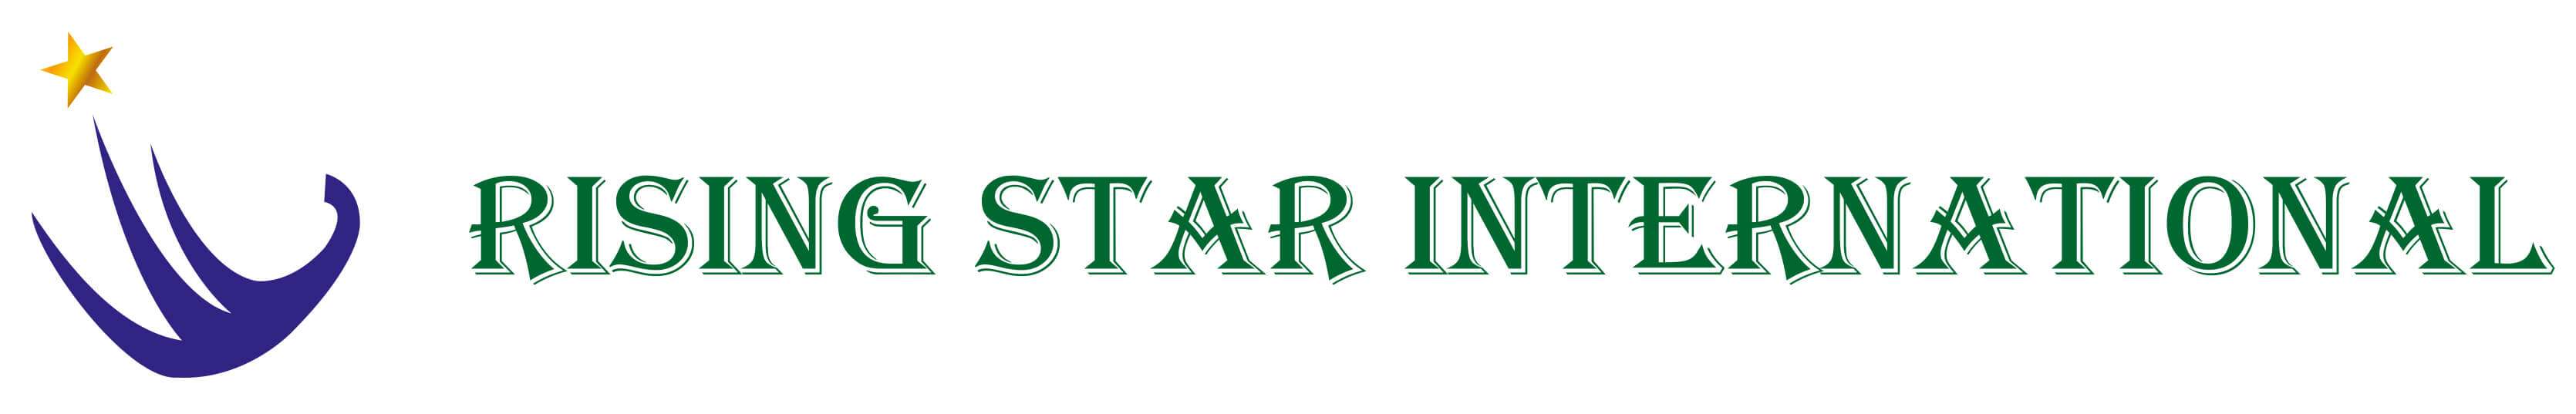 Rising Star International